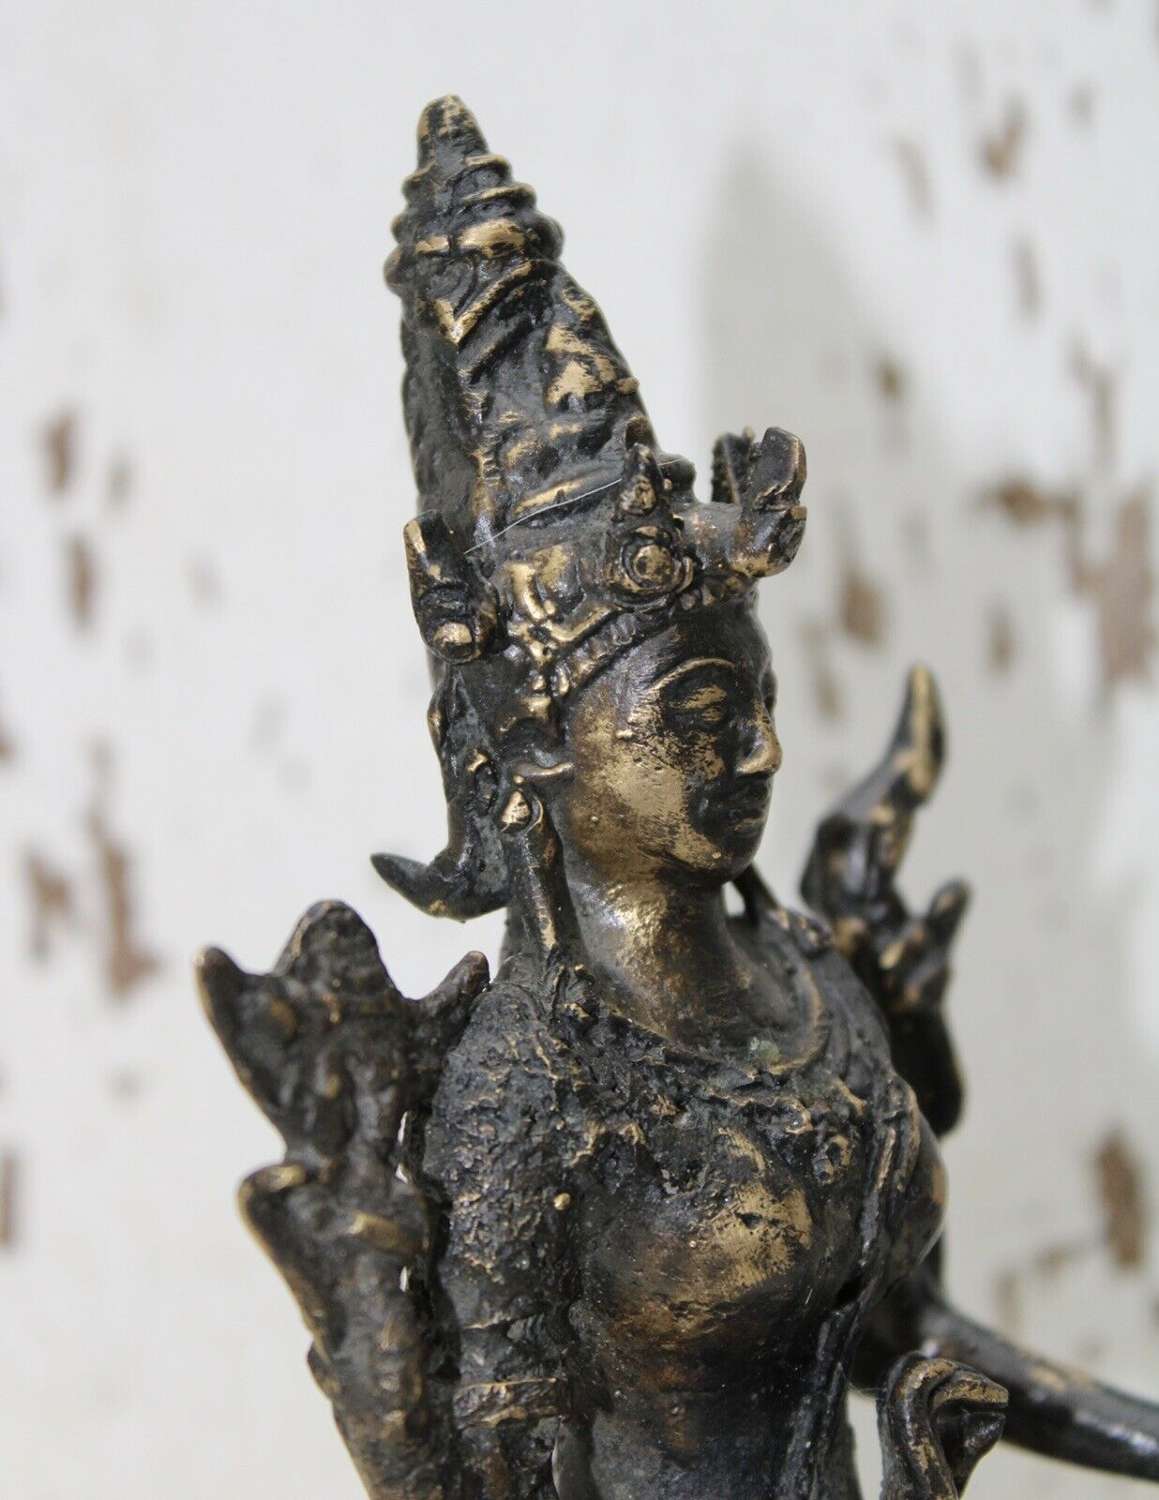 Antique bronze buddha